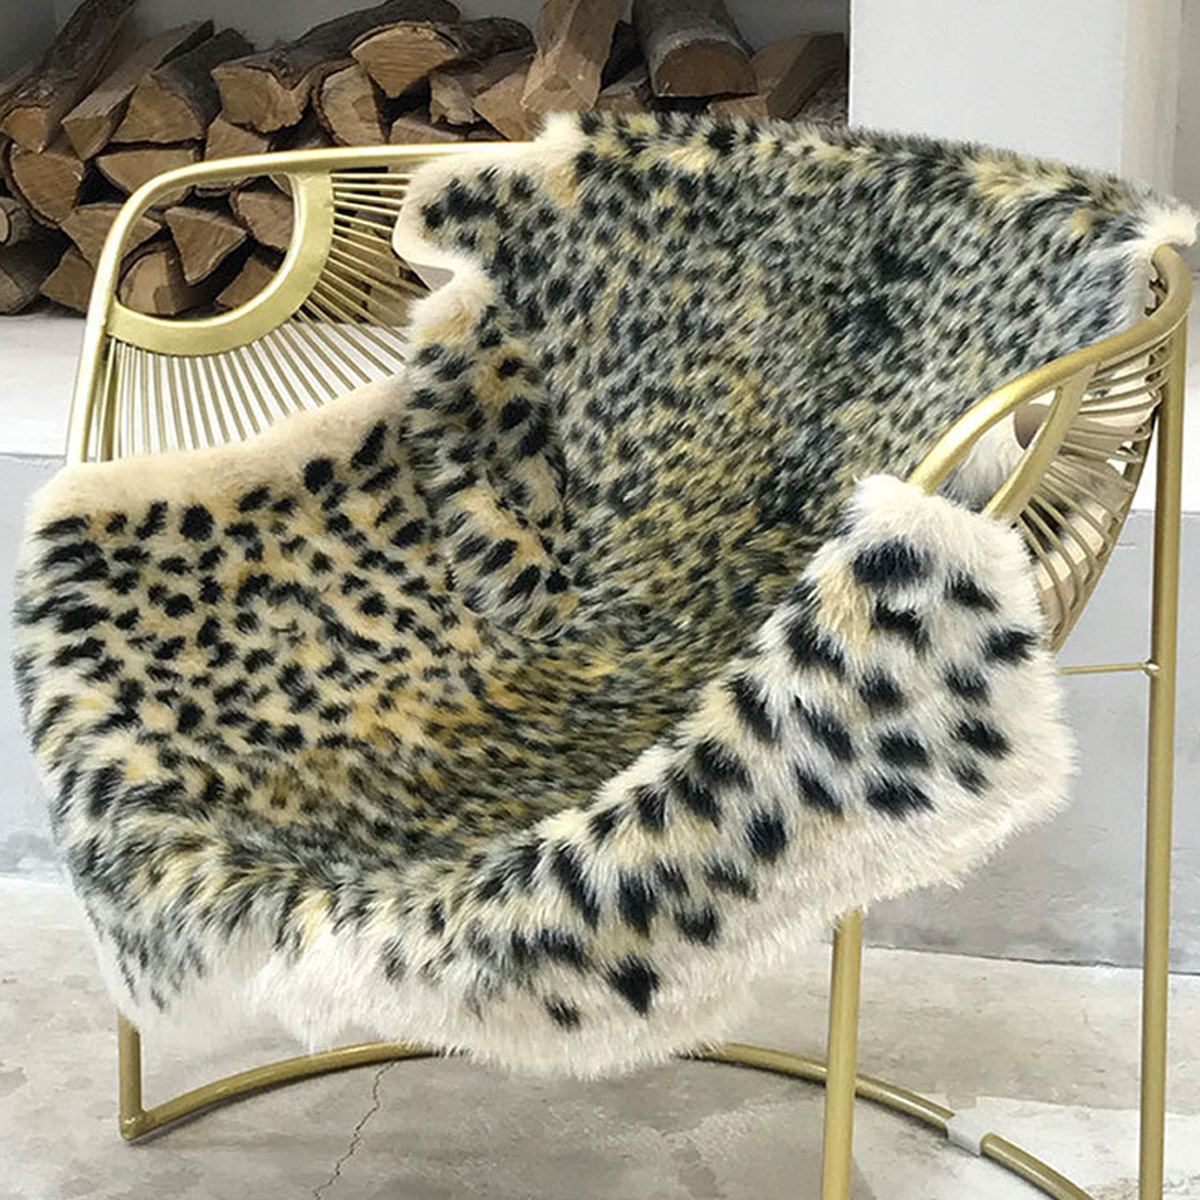 Leopard Print Rug Faux Cowhide Skin Carpet Animal Printed Furry Area Rug for Living Room Decor 90x110cm